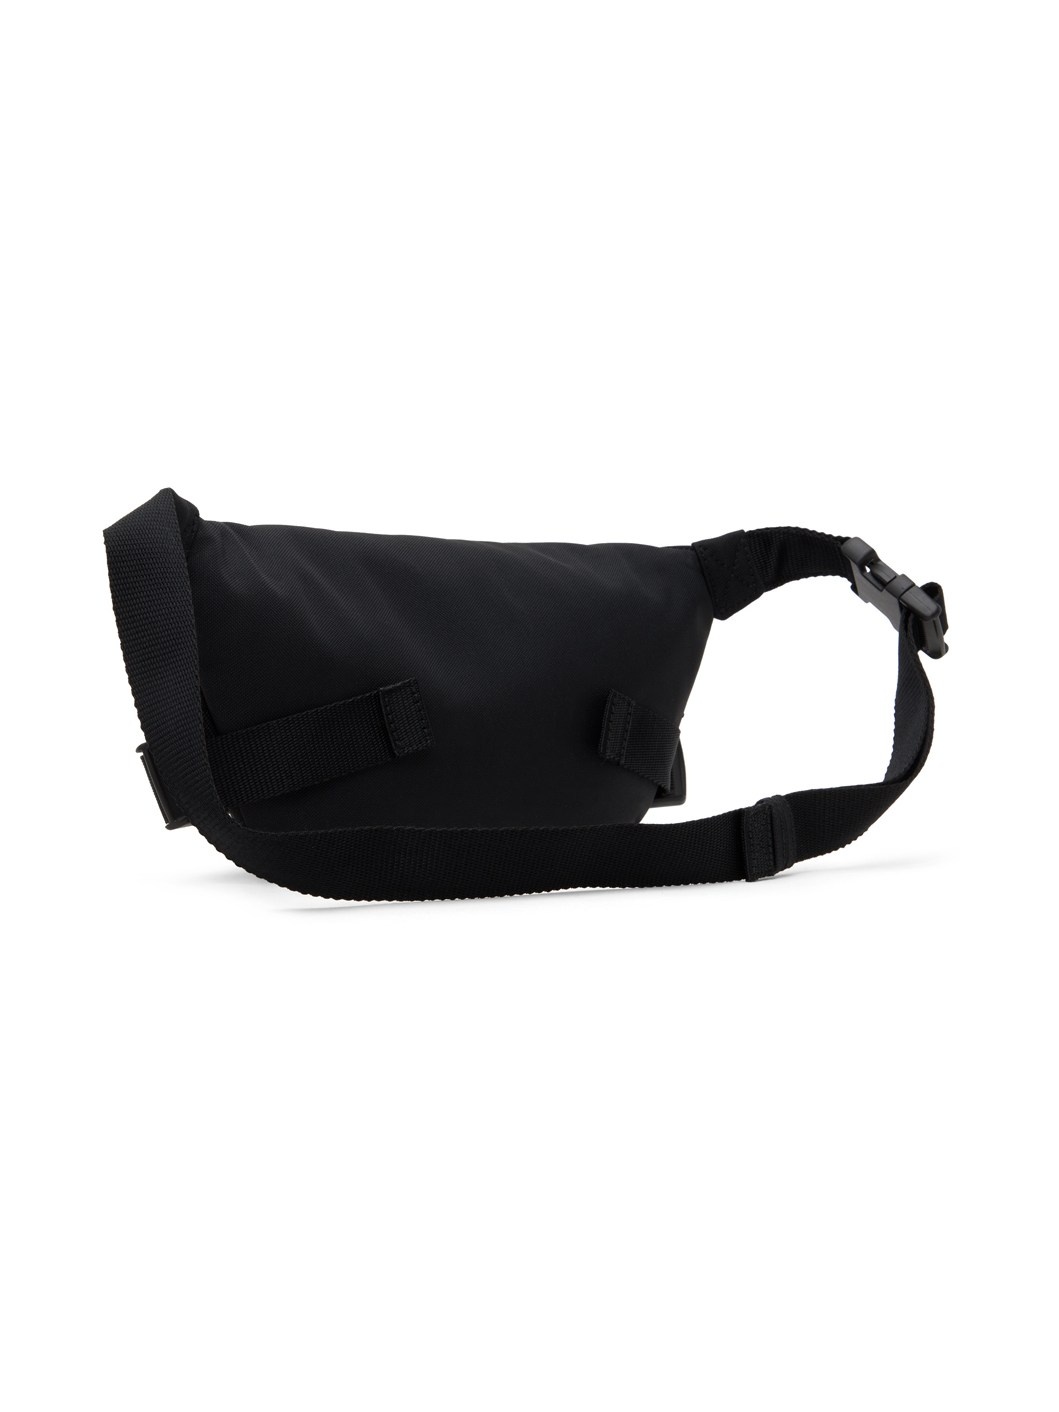 Black Skiwear Ski Belt Bag - 3